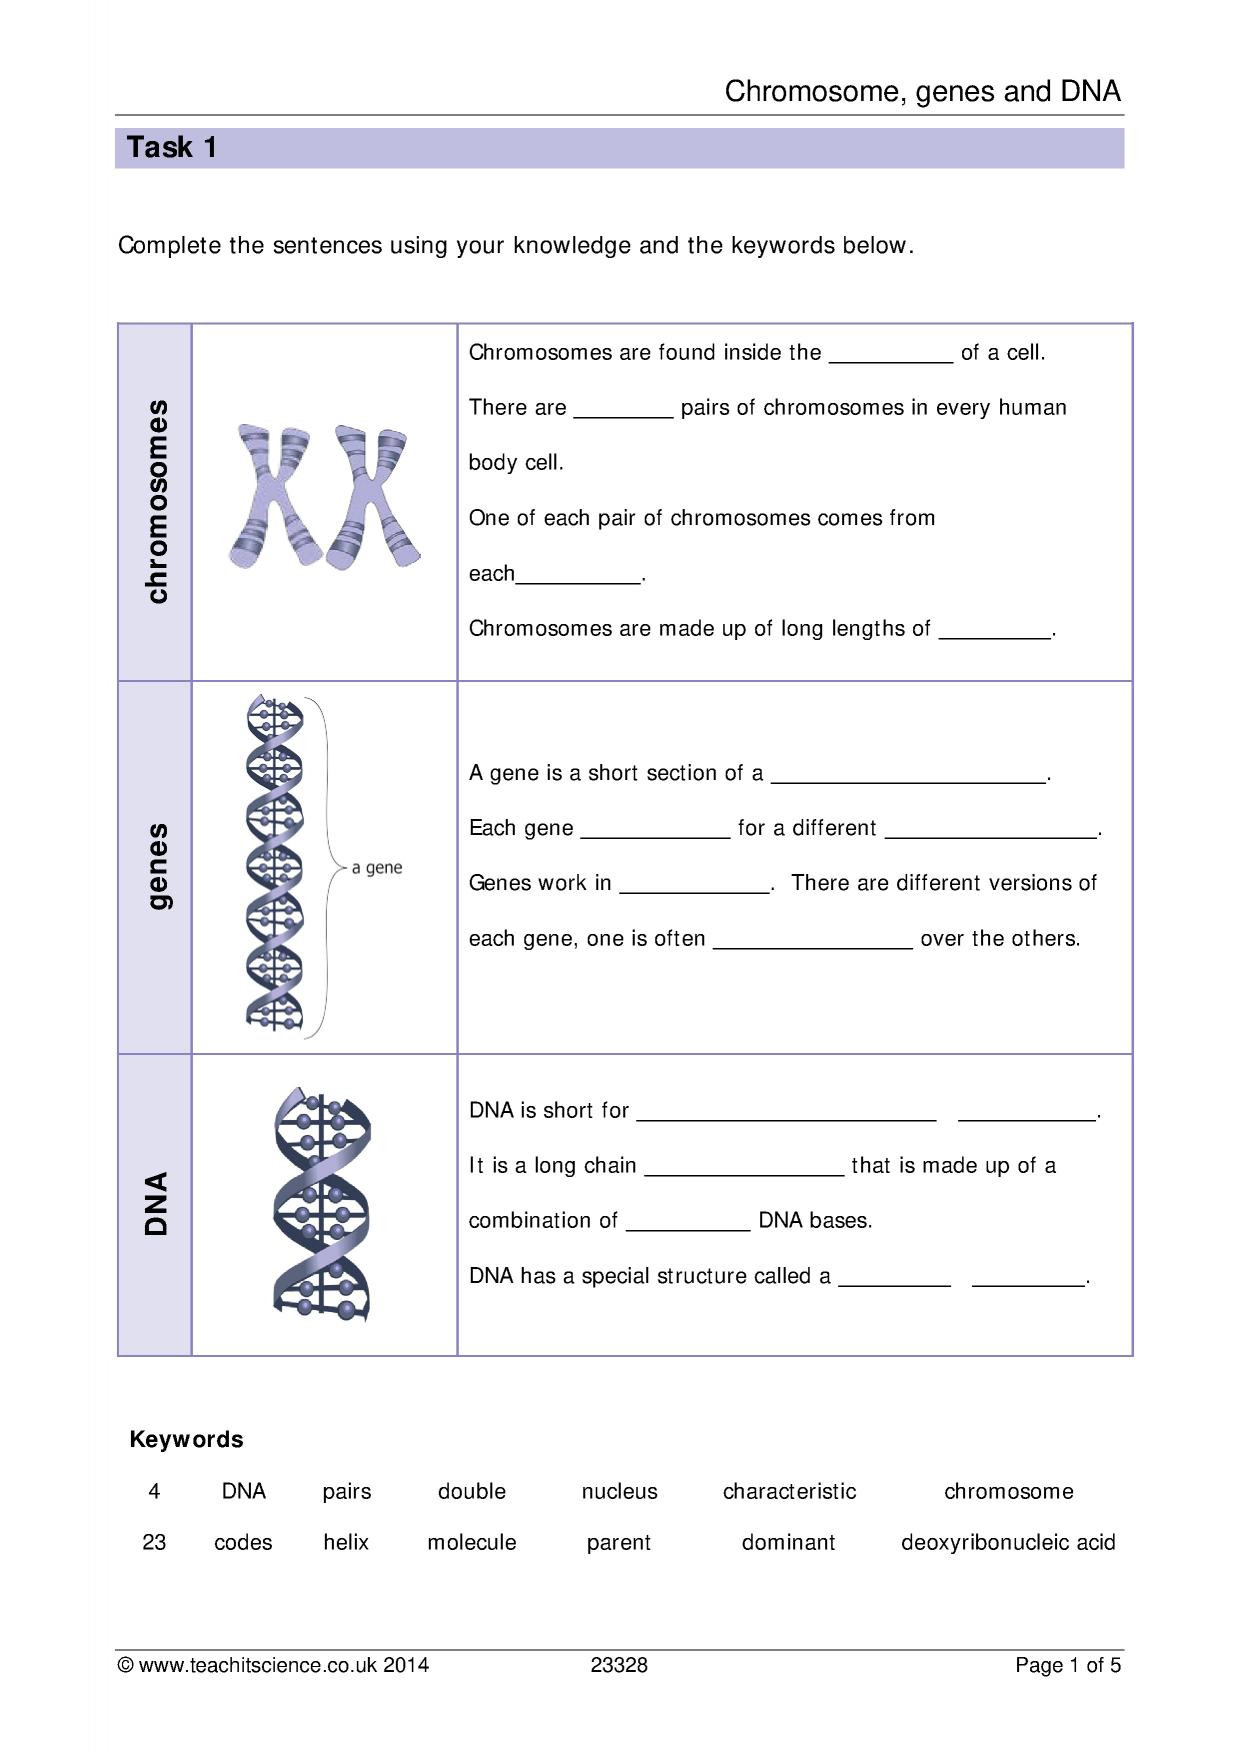 Gene and Chromosome Mutation Worksheet Chromosomes Genes and Dna Worksheet with Answers